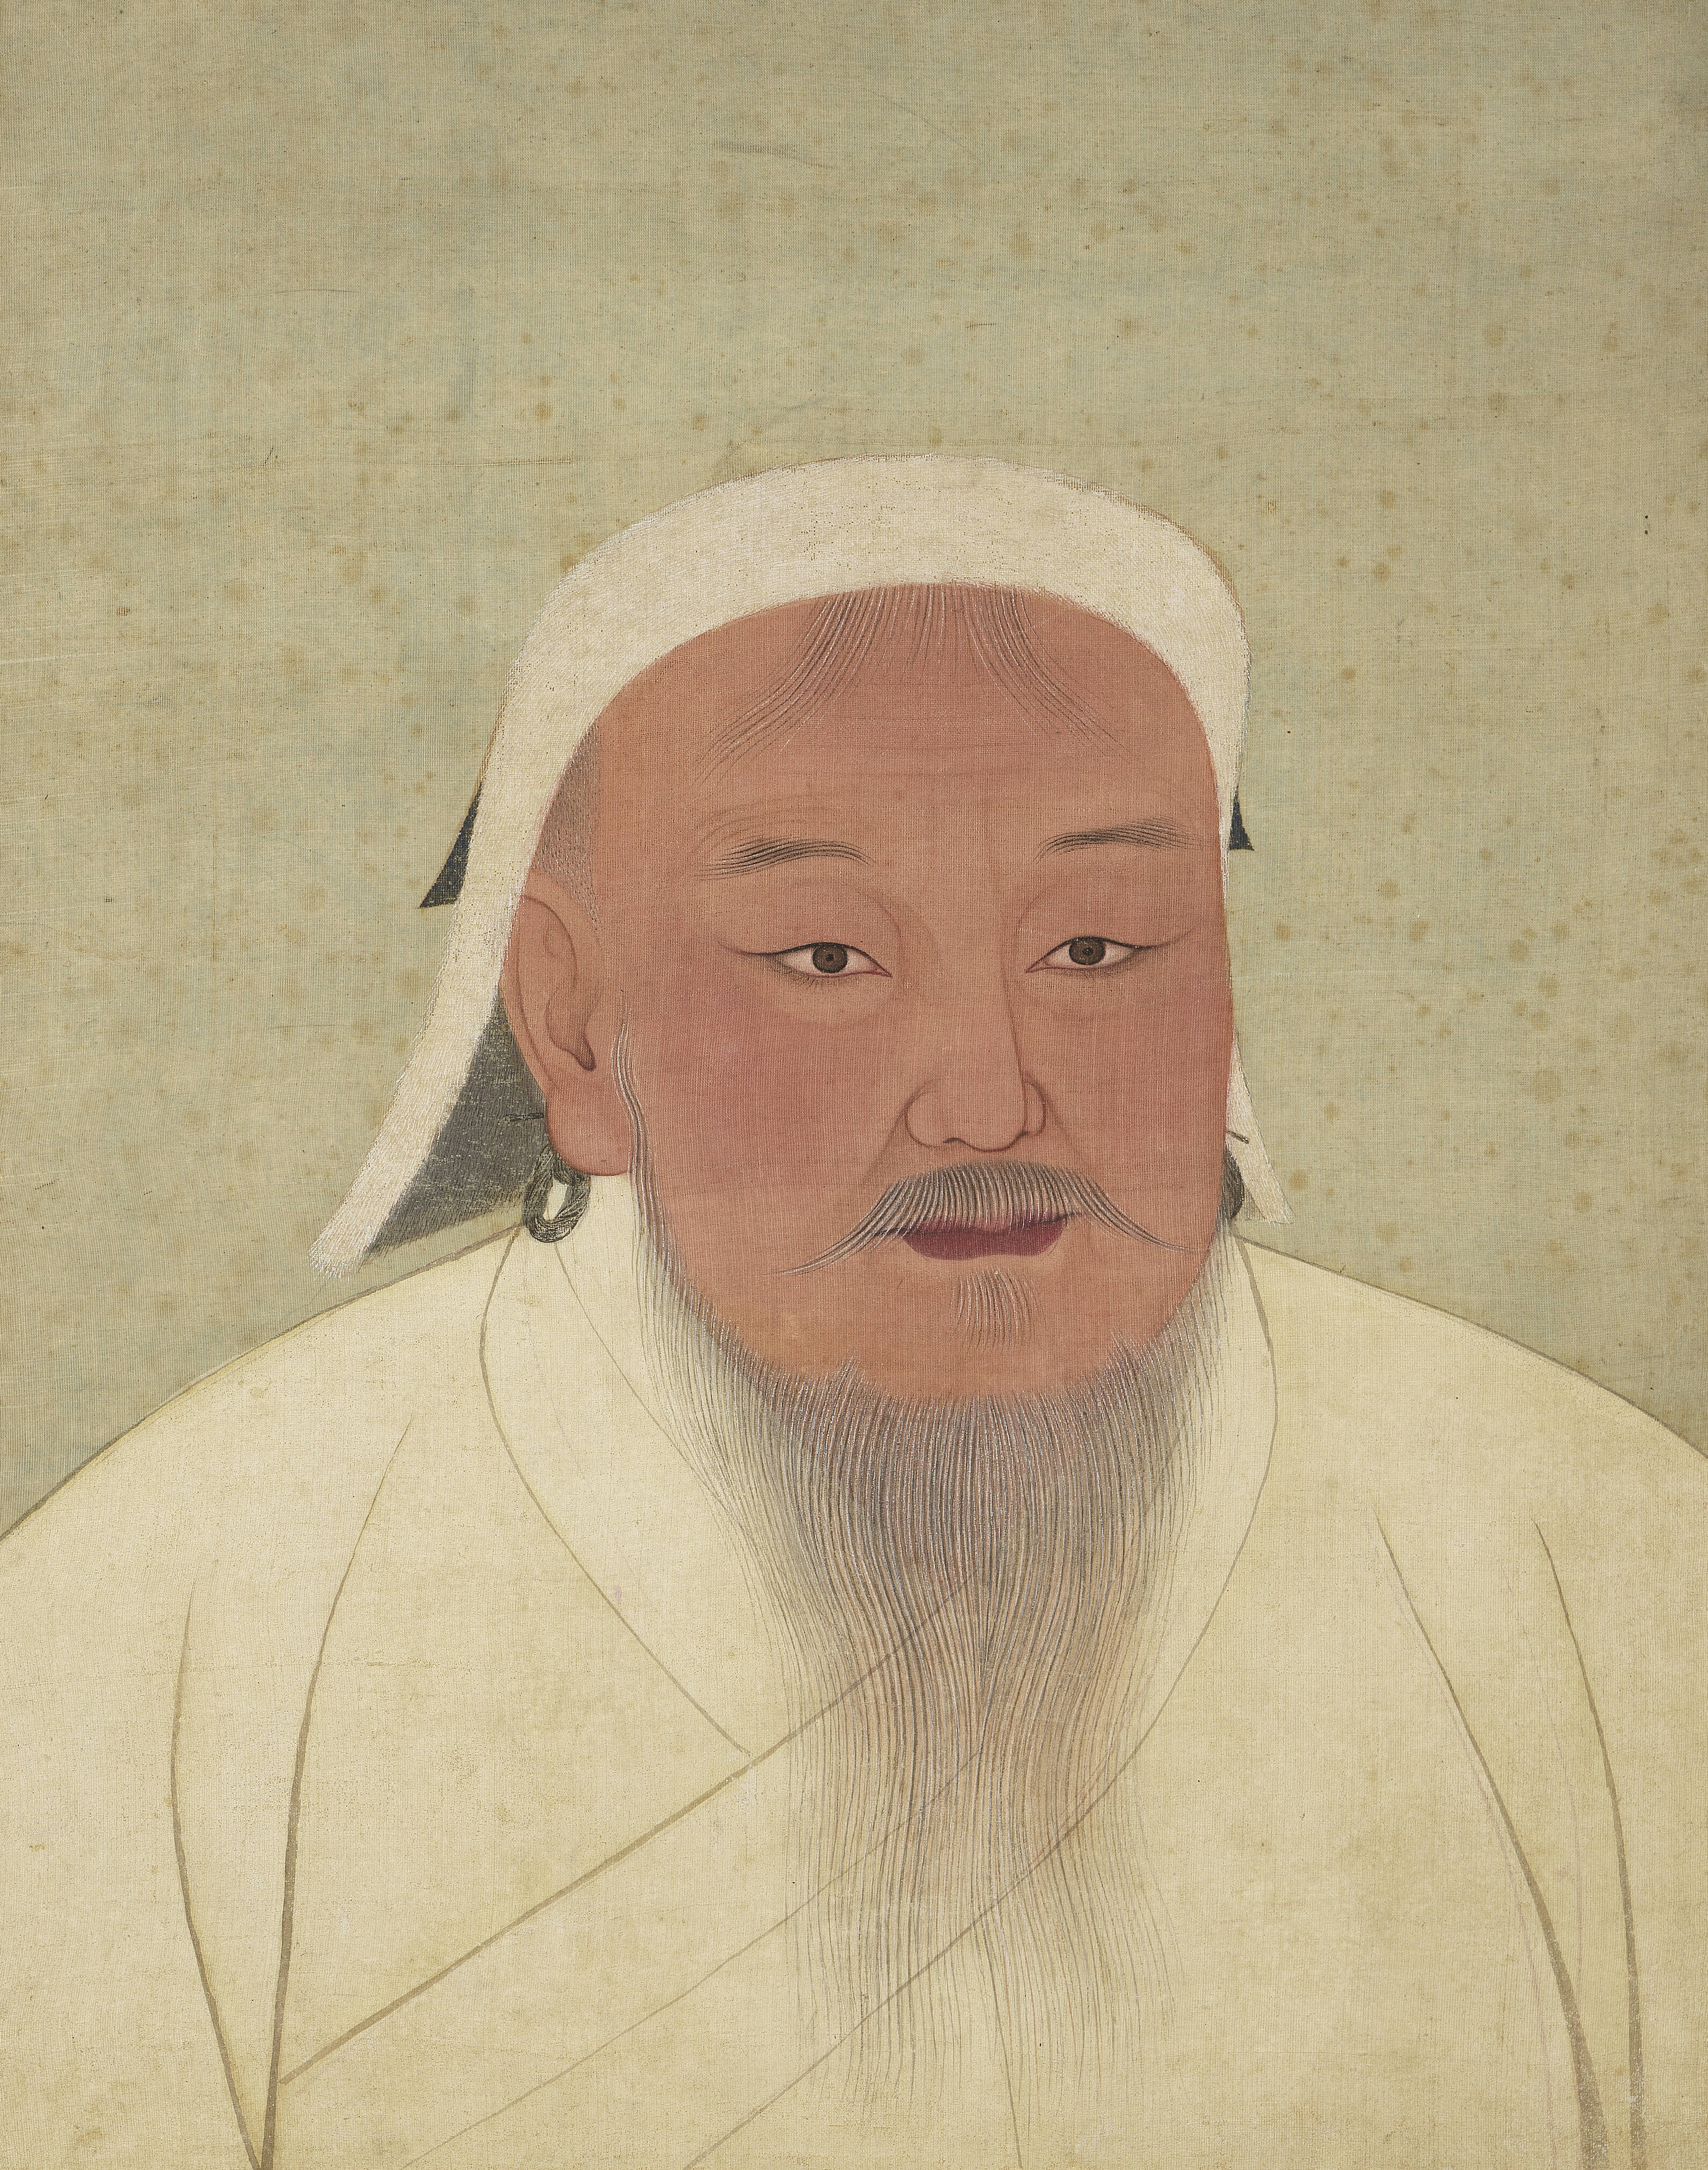 Портрет Чингисхана. Китай, XIV век, эпоха династии Юань